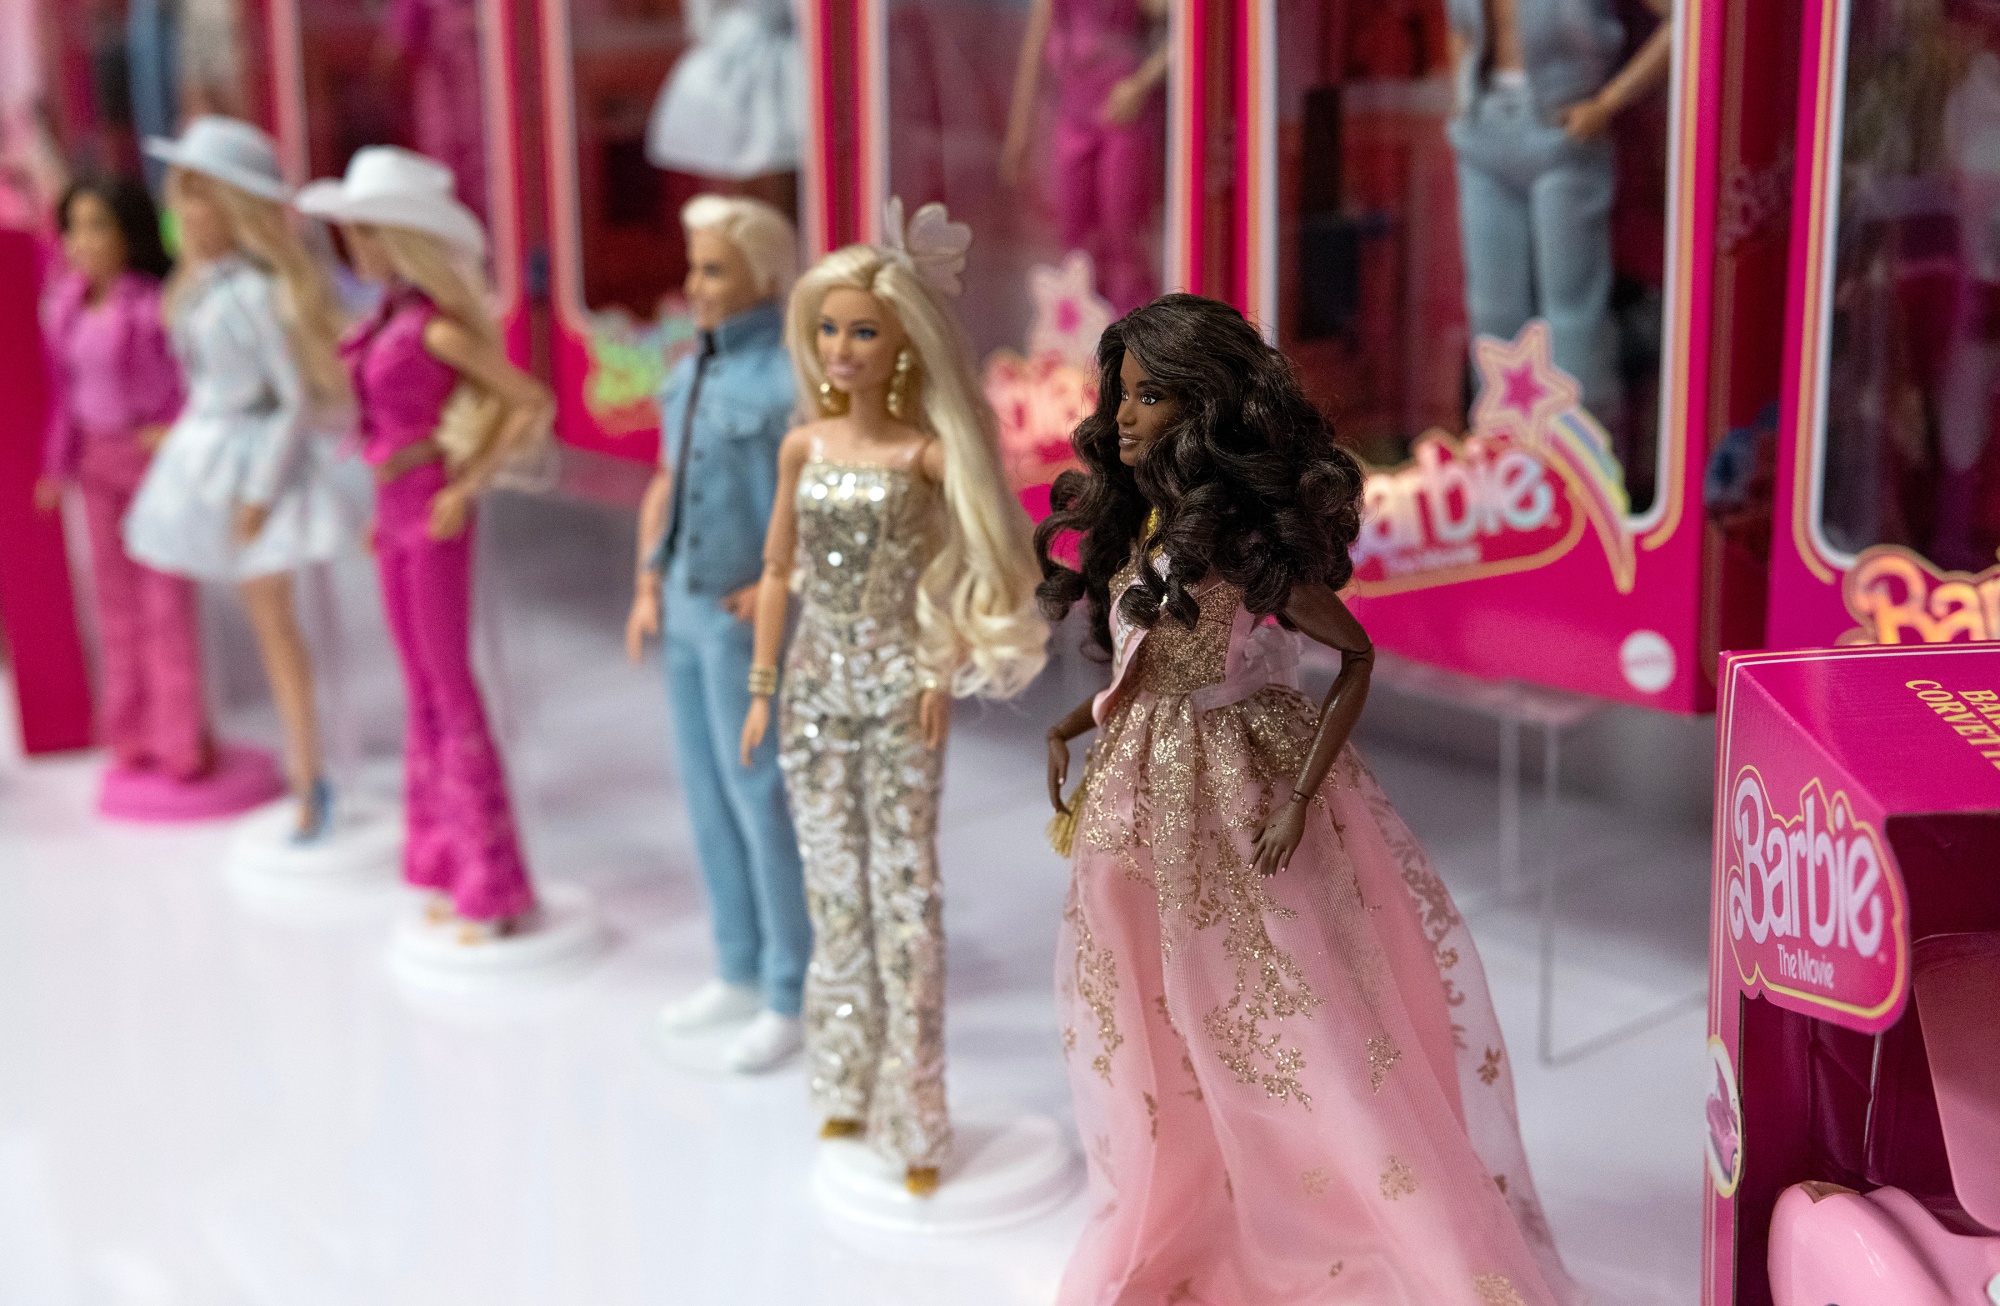 Mattel Stock Sinks 8% To Pre-'Barbie' Share Price